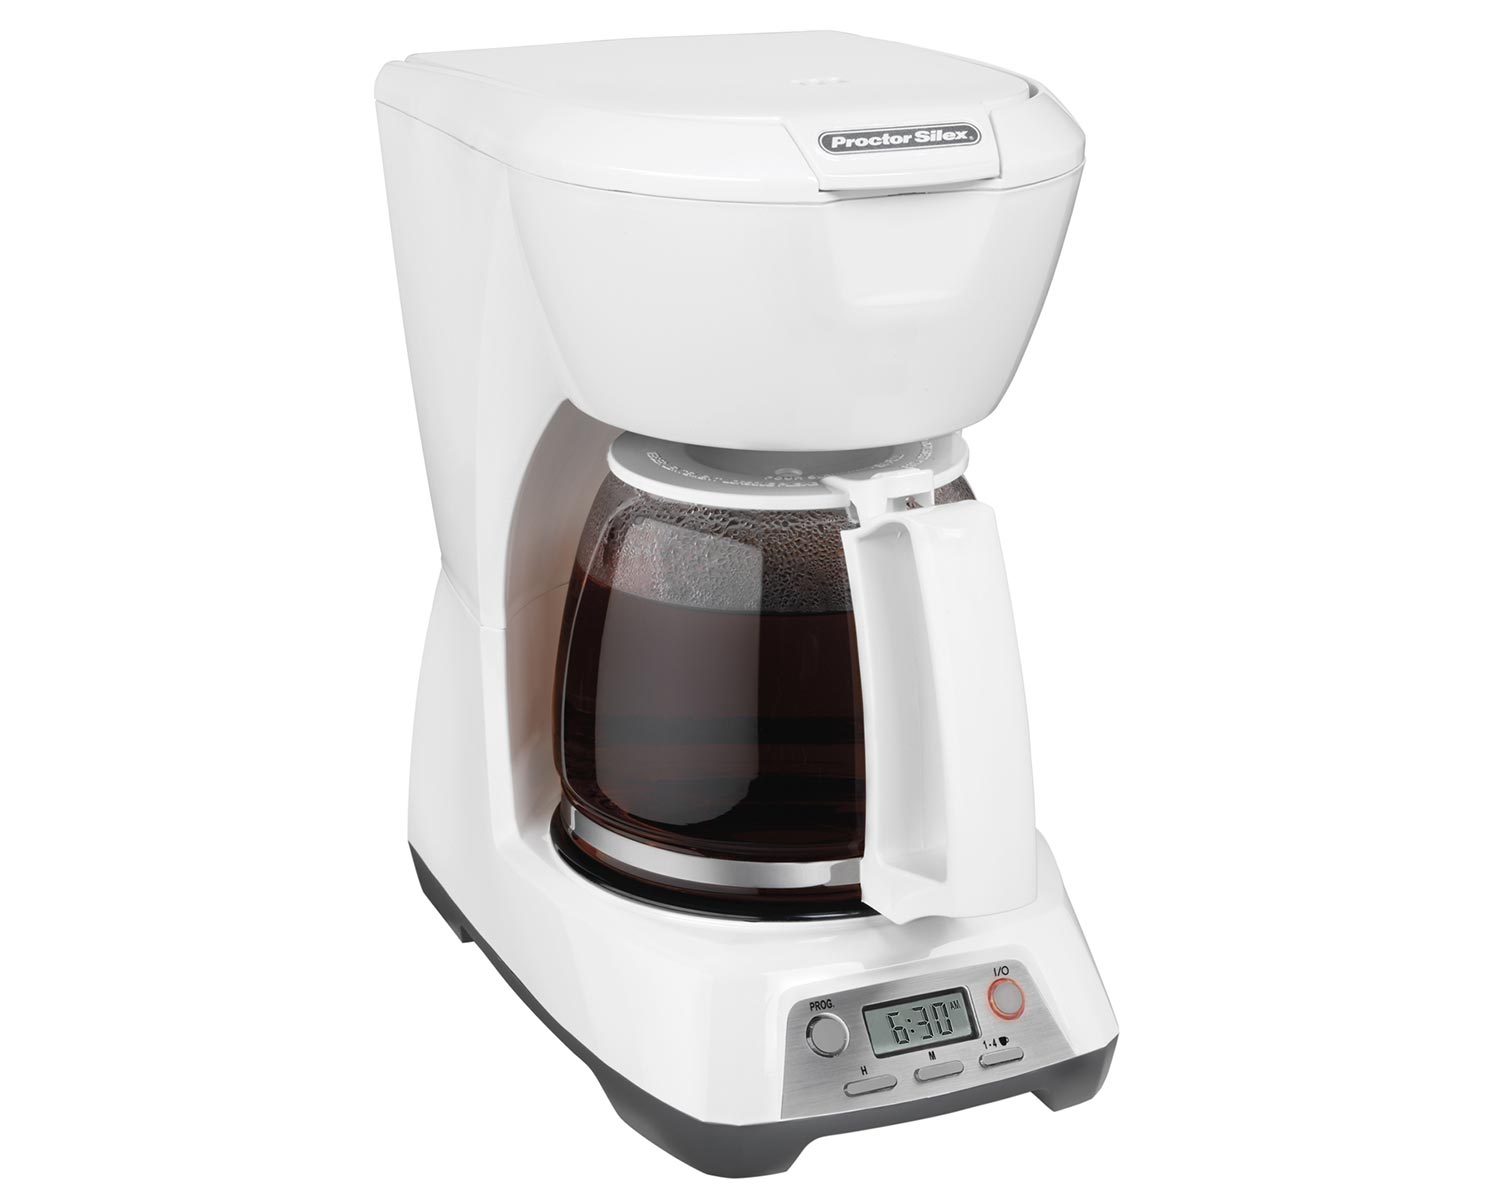 Proctor Silex Coffeemaker, Durable, 12 Cup Capacity